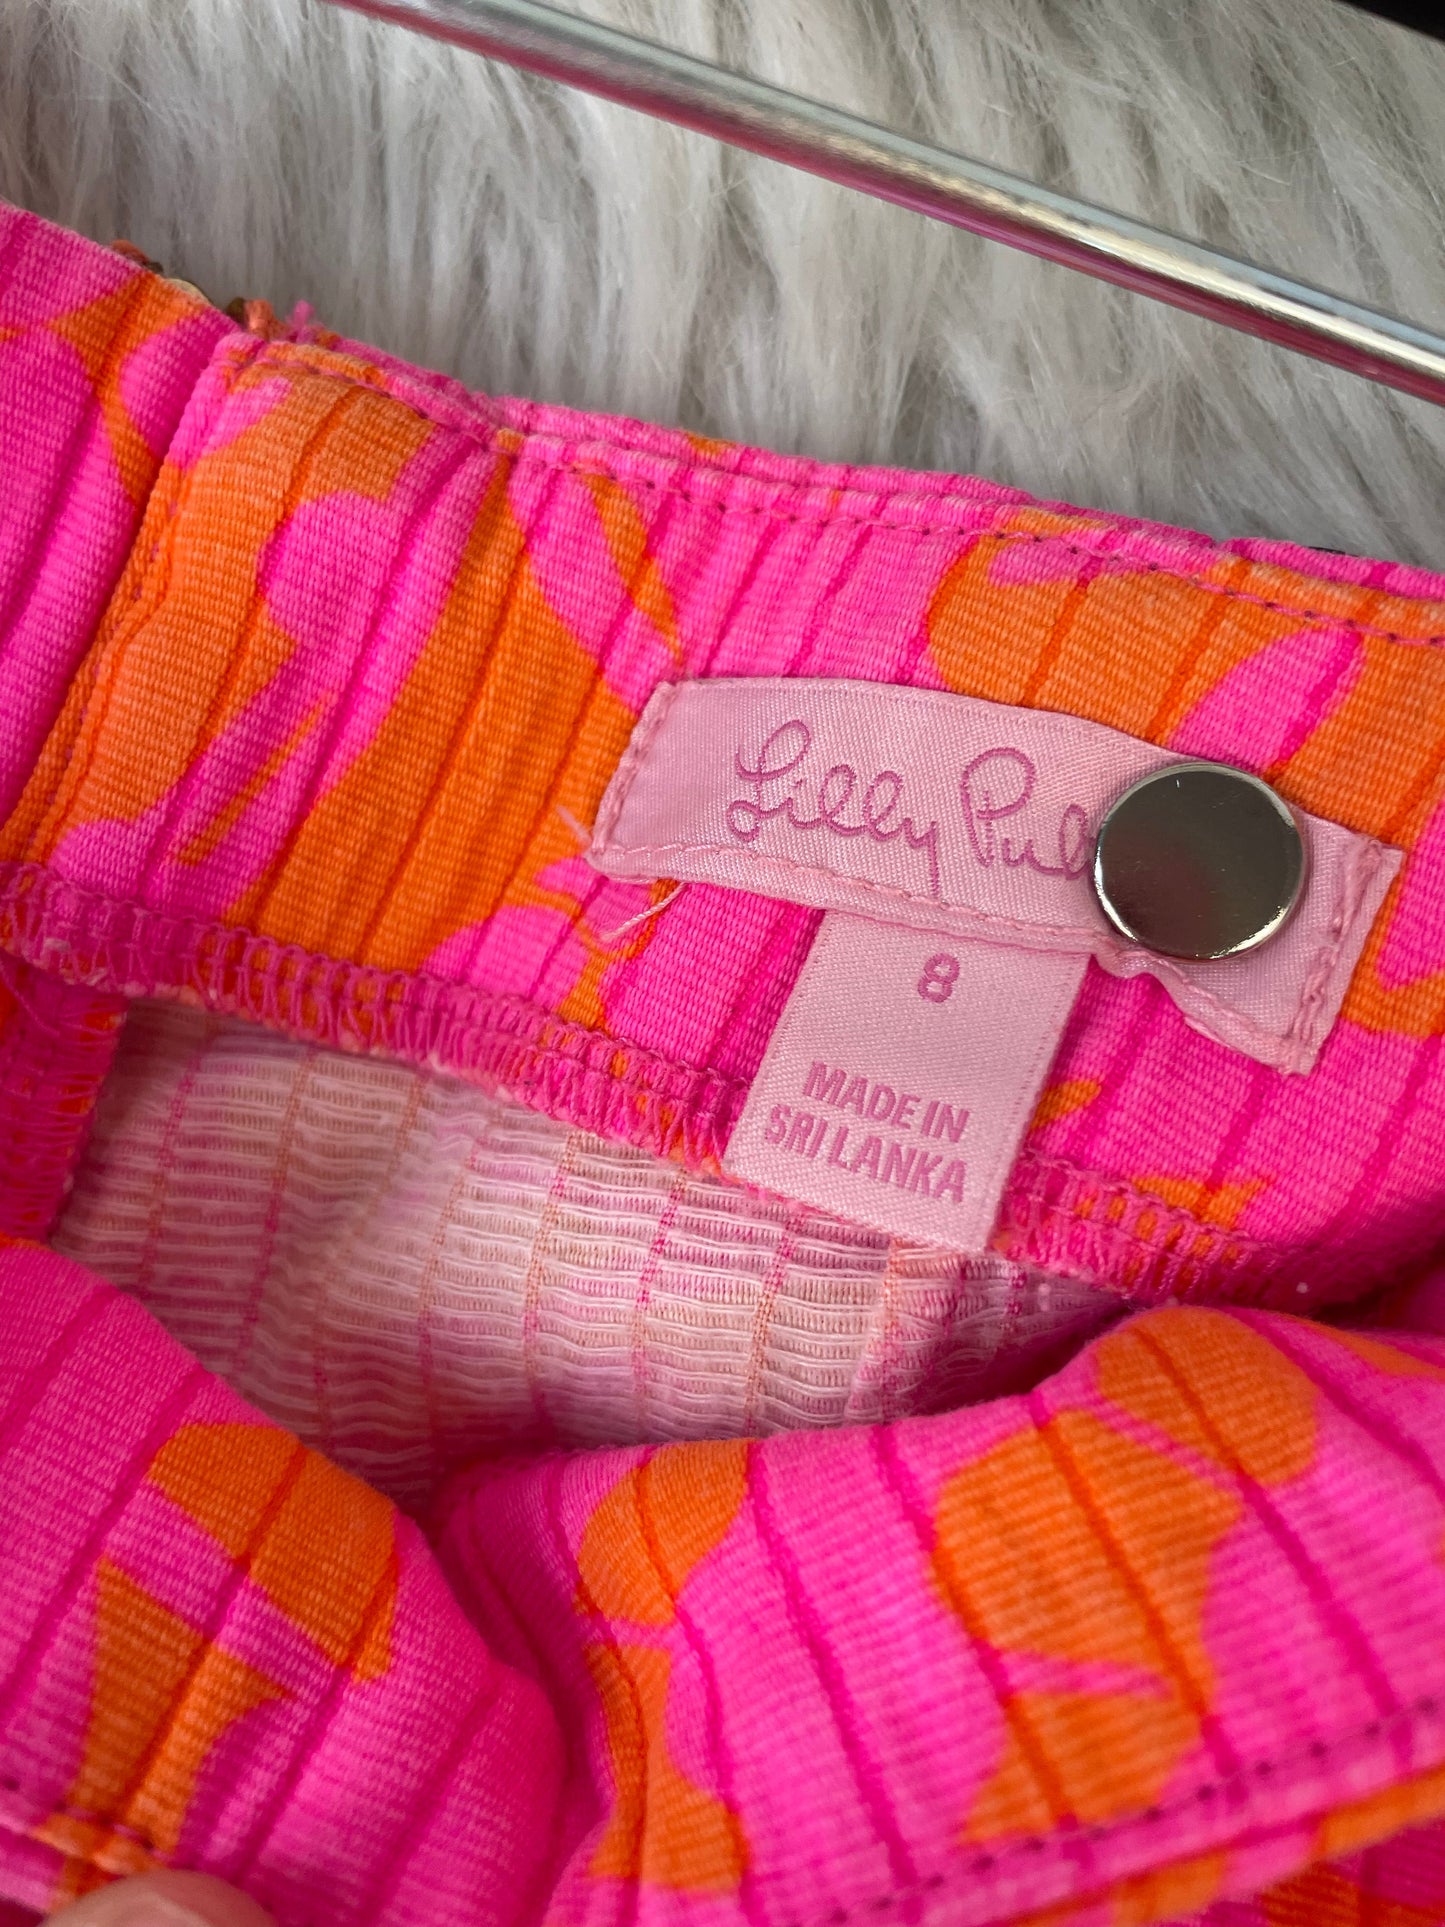 Orange & Pink Shorts Lilly Pulitzer, Size 8